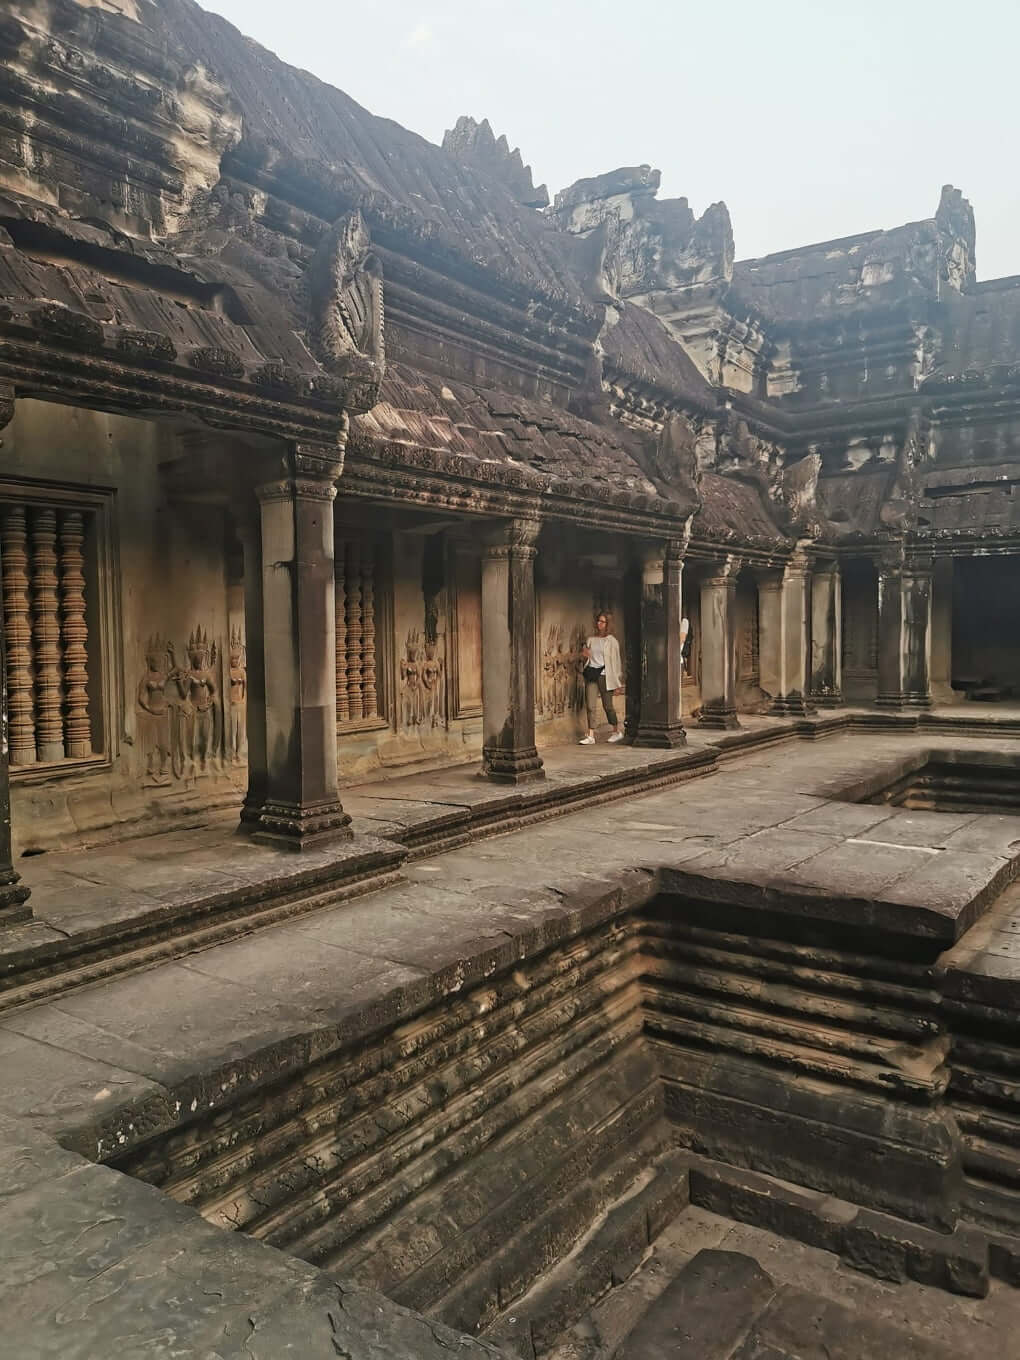 Best-of-Cambodia-8-days-Siem-Reap-Angkor-Wat-5.jpg